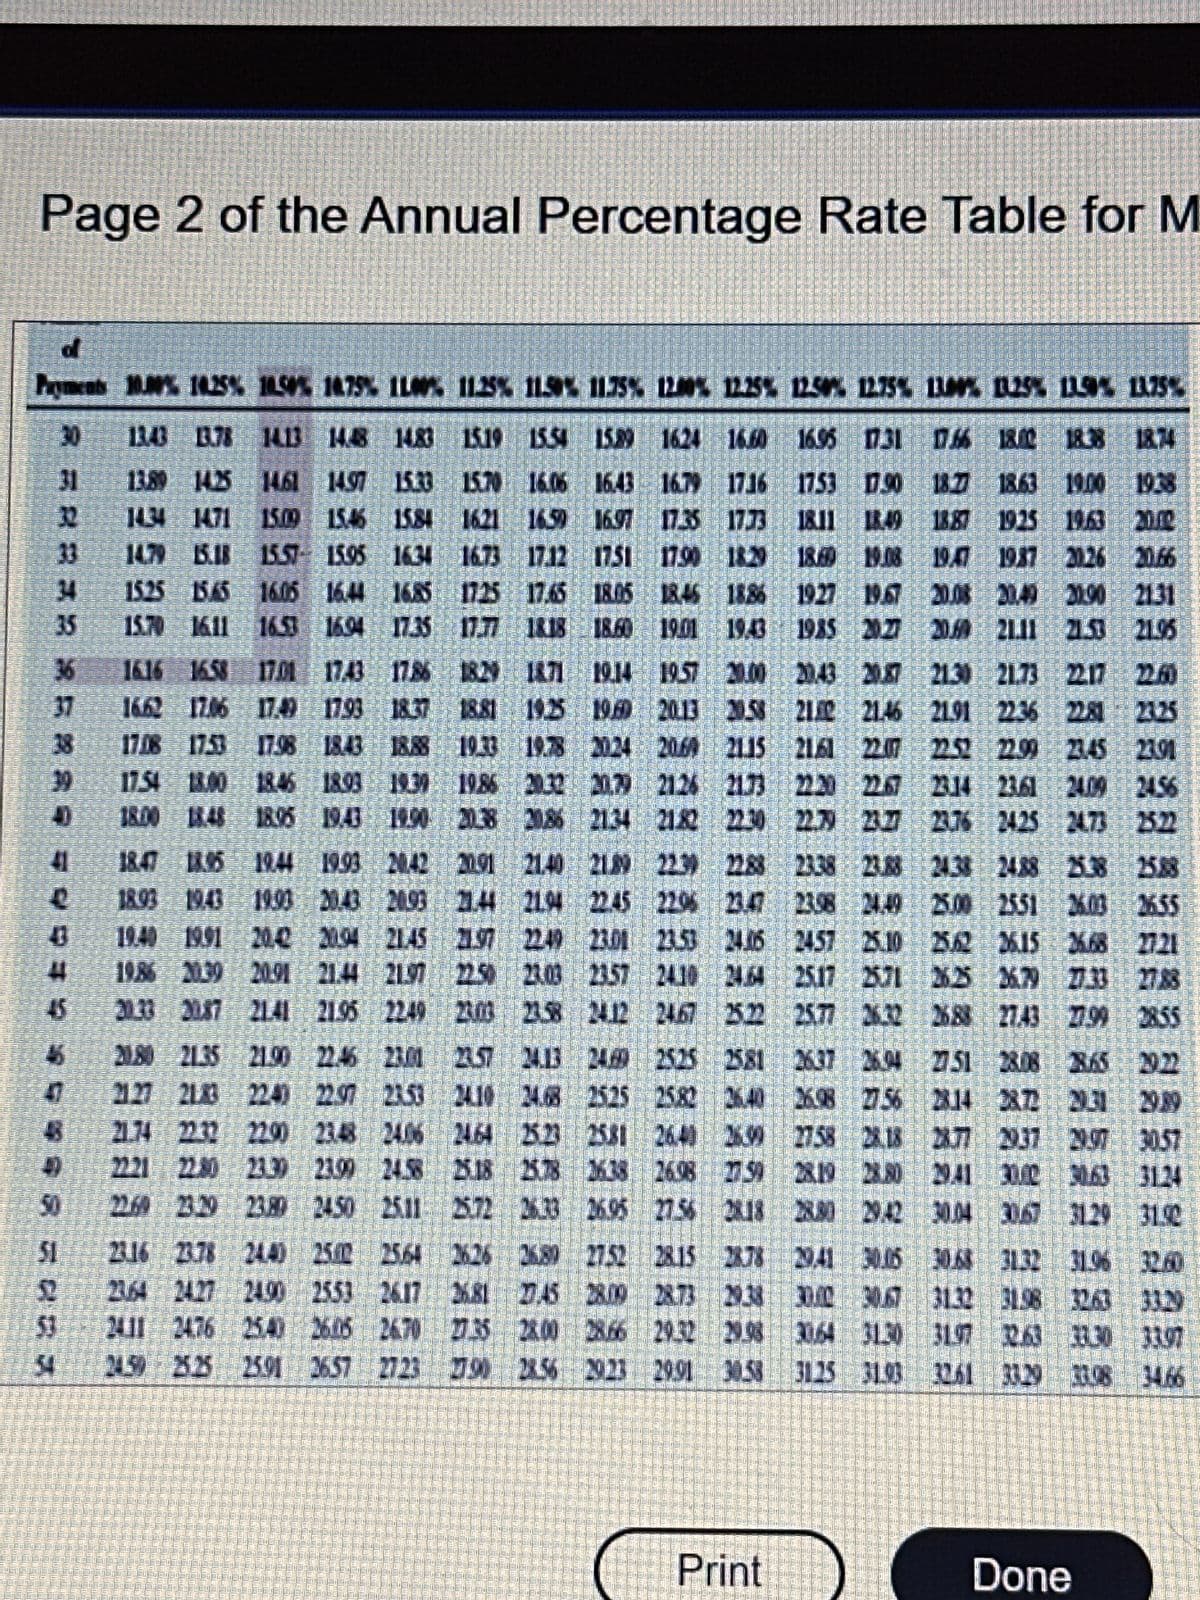 Percentage Rate Table for M
Page 2 of the Annual
ESLYI NGTI ESTE MATEL SETI MST Sstal Sort KSCL 510 STIL 20011 SLOL NASUL NSTOL Sorot
CAY
គឺ
ៗ
ធី
ឬ ៗ
ឬ
ន៍ ឬ
ន៍គ្ន
ឌី ន ន ន នឹង
ន ១ ភ ង ៖ គឺ ។ ឱ ៗ គឺ គឹ
គឺ
||
5121
ន គ ន ន អ៊ គឺ ៖ ន គឺ ខ្លា នីន ឌ គឺ ភិឌគឺ ៖ ឱE
ឌ អ
ឬ
≥
187 1863 19.00 1938
ឬ គឺ
ន
ប
----
LCUL
art
ដ៏ ឮ
..
TITH
ន
--
STETRI
C
ATRICE
YELLOUT
-
5 ≡ ឬ 1
3 ឬ 2 ដុំ
ង 5 ៗ
---
គឺ ភព
TIT_I7)
អ៊ នី 2 ៖ 5
៖ ឱ គឺ
ឬ
និ
៖ ៖ ដ ន ស ត
adja
ង ង ព
E និង 5
! 3
១ 5 ≡ ។ ខ្លះ ៗ គឺ ១
ឱ 3 8 1
ឌ
5 3
១ × ឌ
: ន ន ន
៖ ឌី
។
គ
5 ខ្លះ : ឌី ១ ៖ ម -
ៗ 9
និង
Chen
គឺ គឺ
ៗ =
ស៊ុំ ≥ × ៖ គឺគឺ
ឌ ភន ន ឌ3 ឌ
ភឌ
២២
ន ន E 5 F ≡ គឺ
គឺ ឌ គឺ 5
1 ≡ និឌី
=
អ៊
ៗ ឌខ្លះ -
ន
x
និង ឌី
-
¬-
ELE
៖ ដ5 ខ្លី
FELD
BUCHE
109ECTVE
GETELE
អ៊ ៖ គឺ ៖ ឱ គឺ ៖ គ
CARICO
ត...
ម× 35 BEE៖
៩គូង និទី ៖
........៩៩ ៩៩៩ - ៩
គីងៗ។
× ៨ គឺ ៖
ឌ ននិ
ង ឌី ៖ ឌ , ឆន ៗ គ
PENCEROS
VE
ជា
≡ ≡ គឺ គ ។ ន ដ ន ស ន ឱ
៖ ឌ ≡ គឺ នី ៗ ៖ ឌ គឺ គឺ និ
និត ឱ ឱ z
TE
....
-...
TERE
Done
Print
CE
DOLI
E